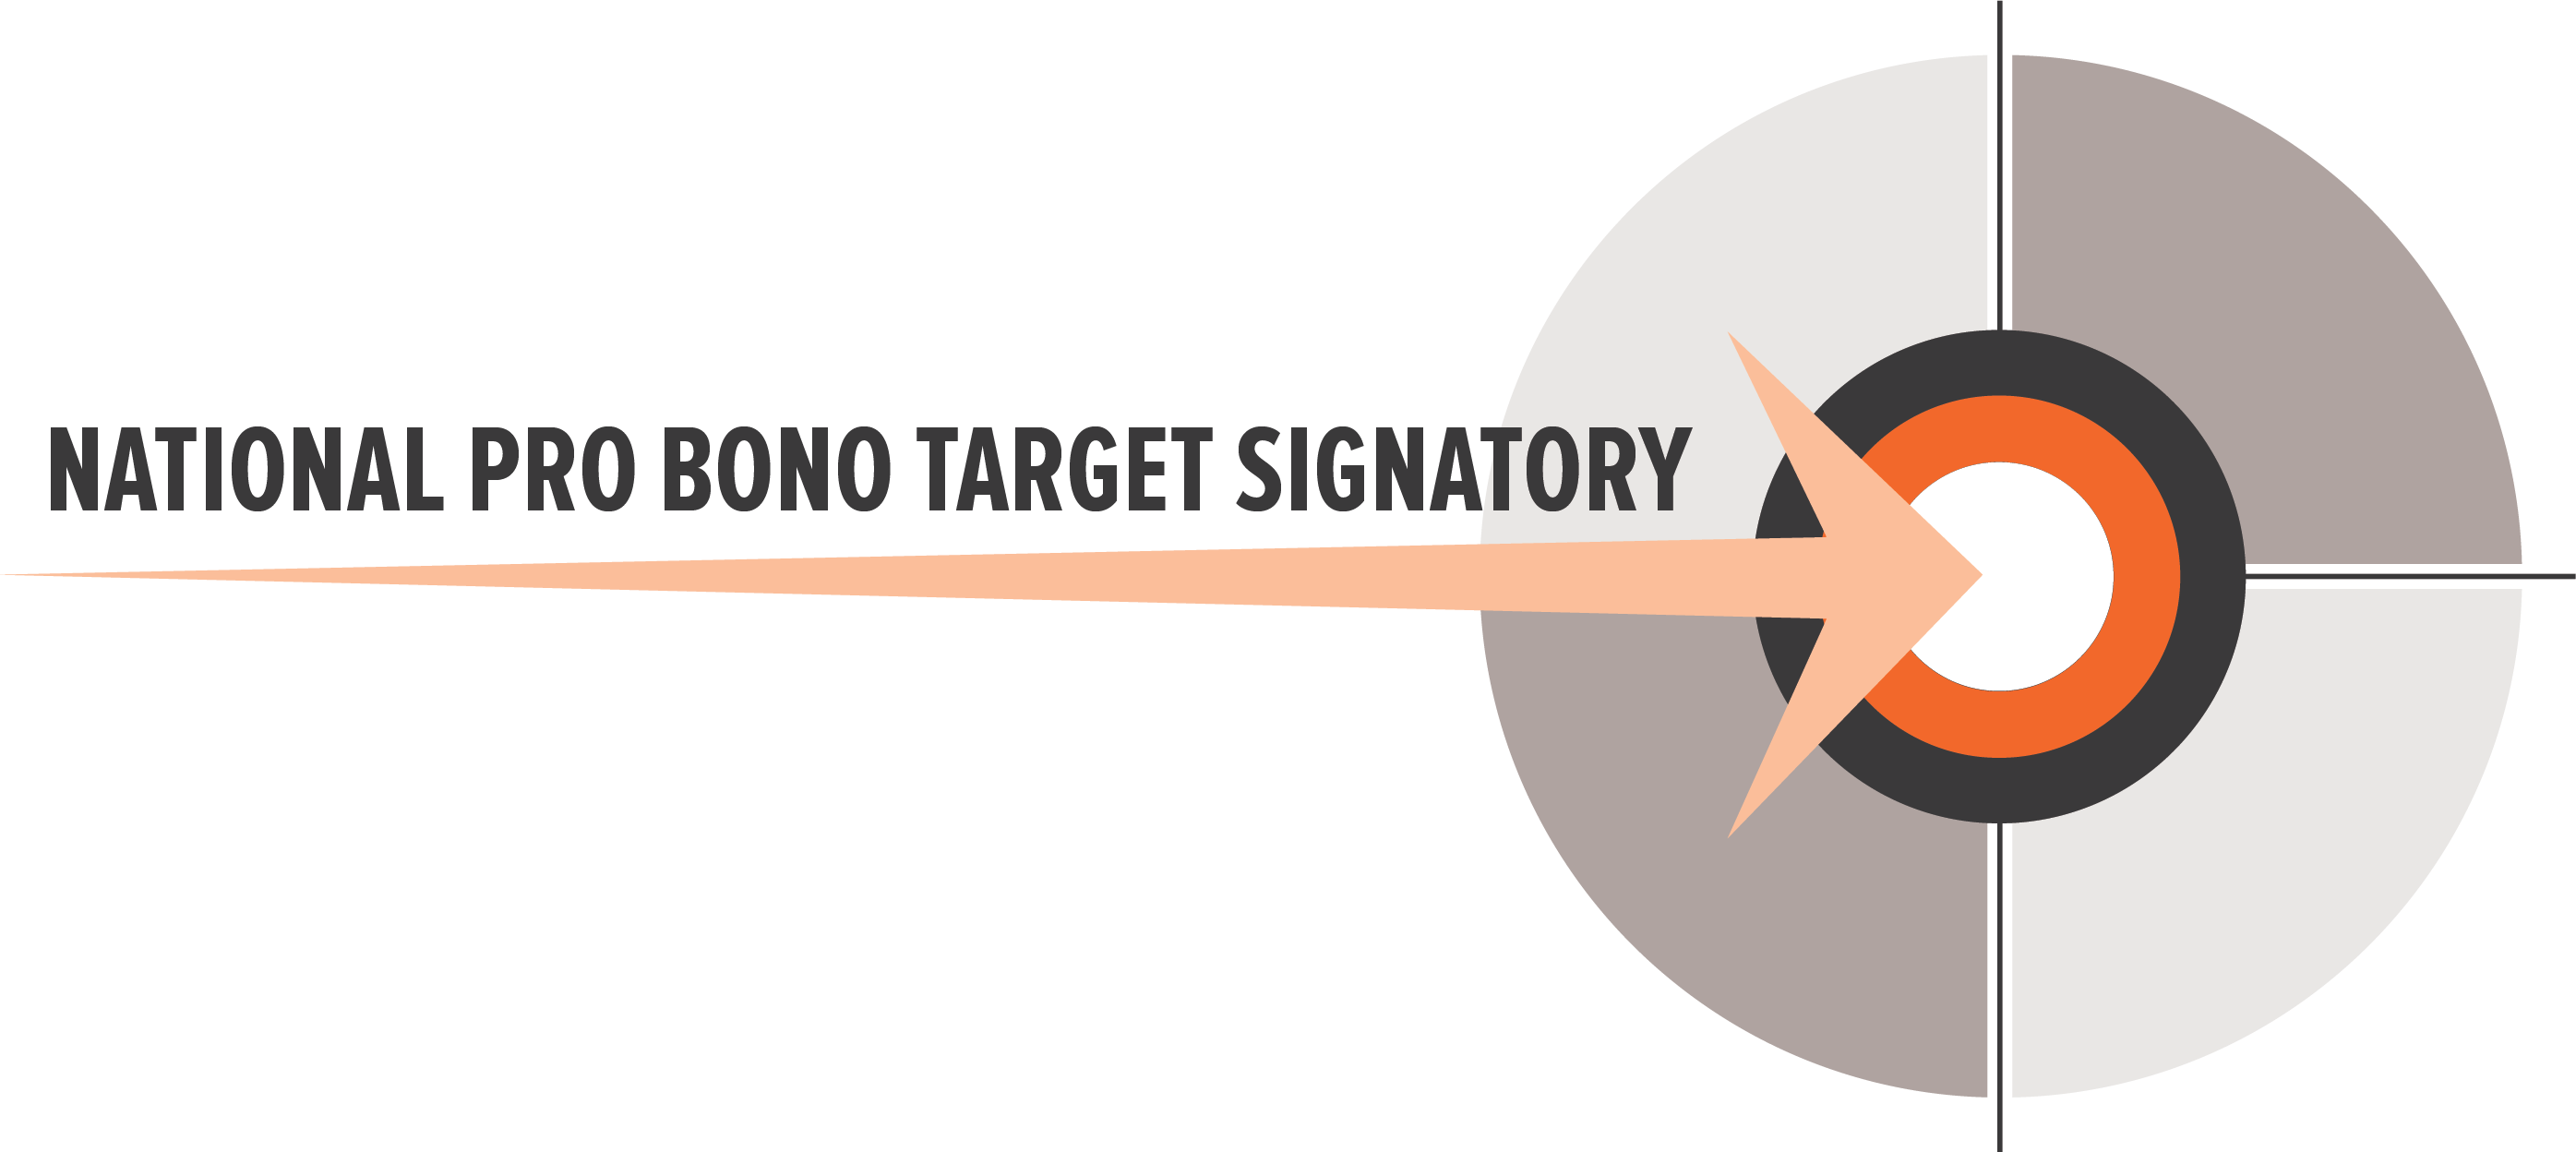 Pro Bono Target Signatory Logo